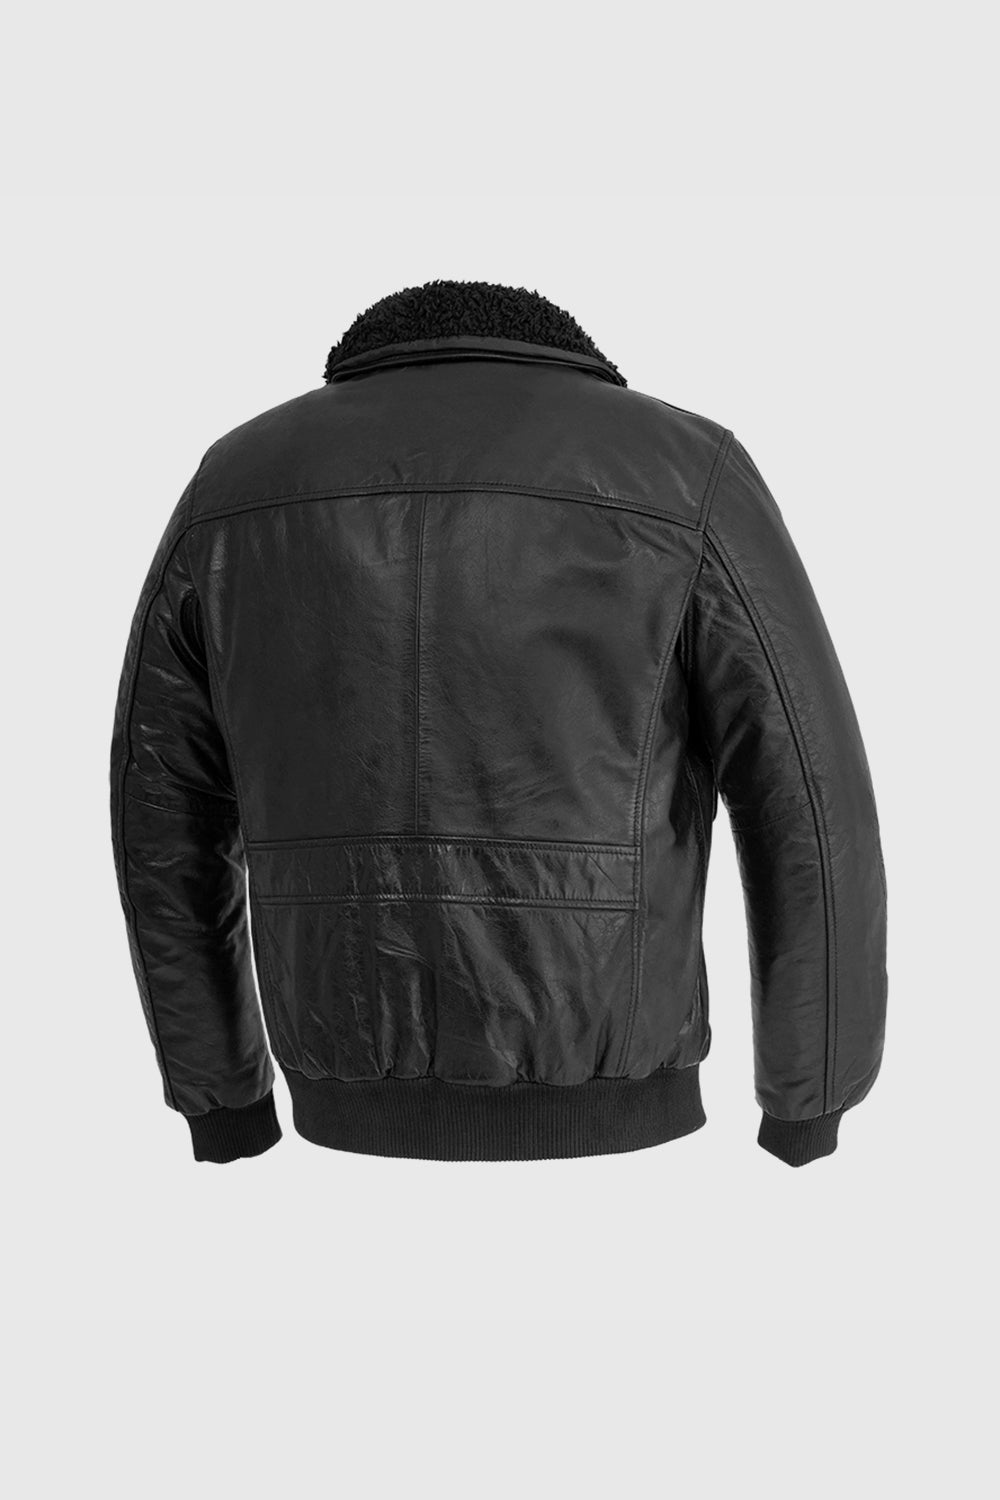 Men's Brown Leather Bomber Jacket  KC Leather Signature Range - KC Leather  Co.